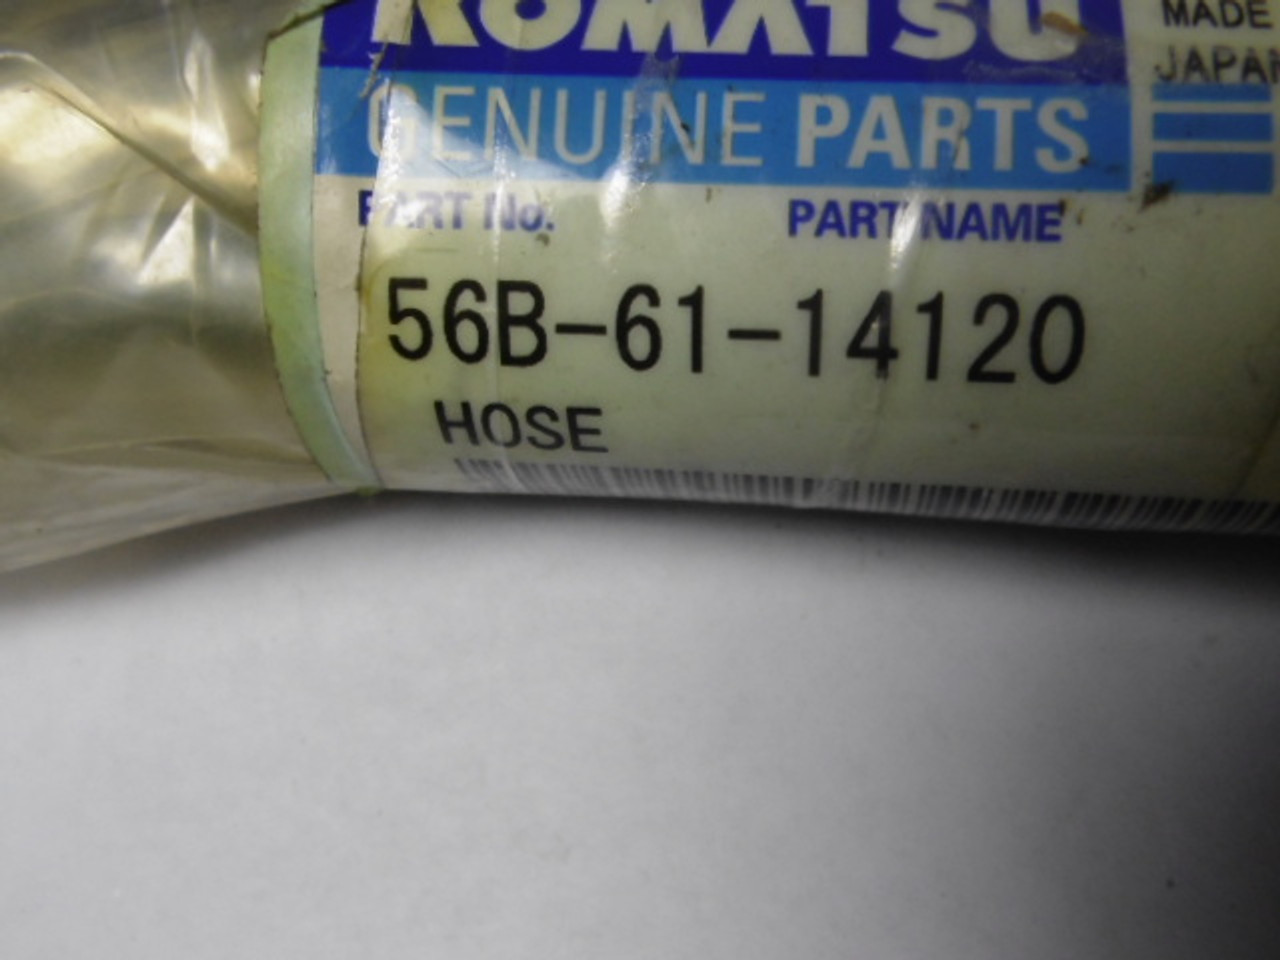 Komatsu Genuine Parts 56B-61-14120 Hose ! NOP !